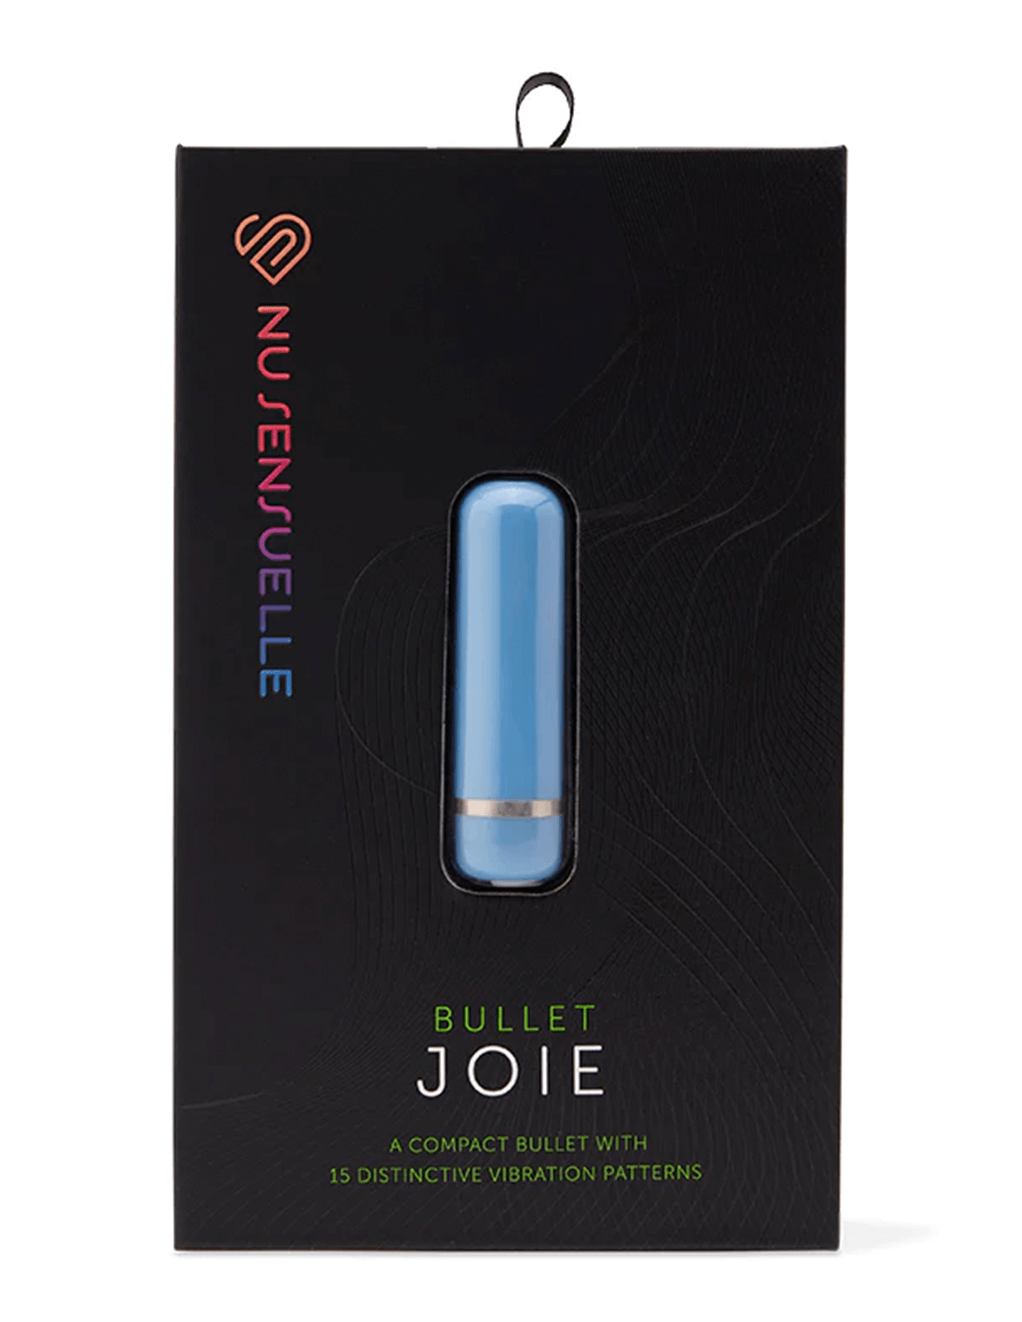 Nu Sensuelle Joie 15 Function Bullet - Teal - Box Front